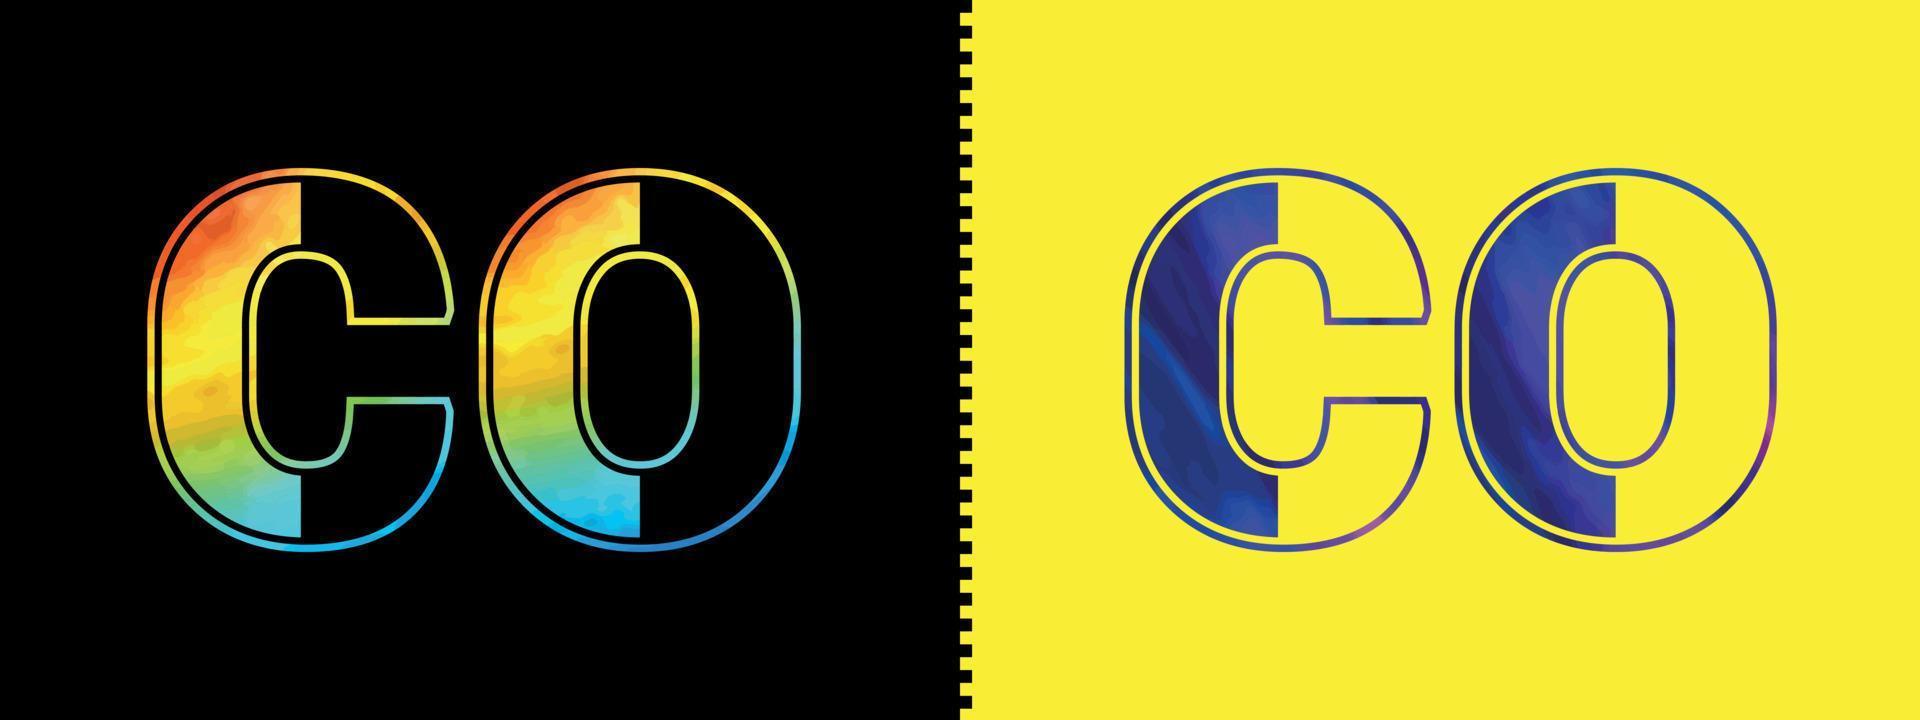 Unique CO letter logo Icon vector template. Premium stylish alphabet logo design for corporate business